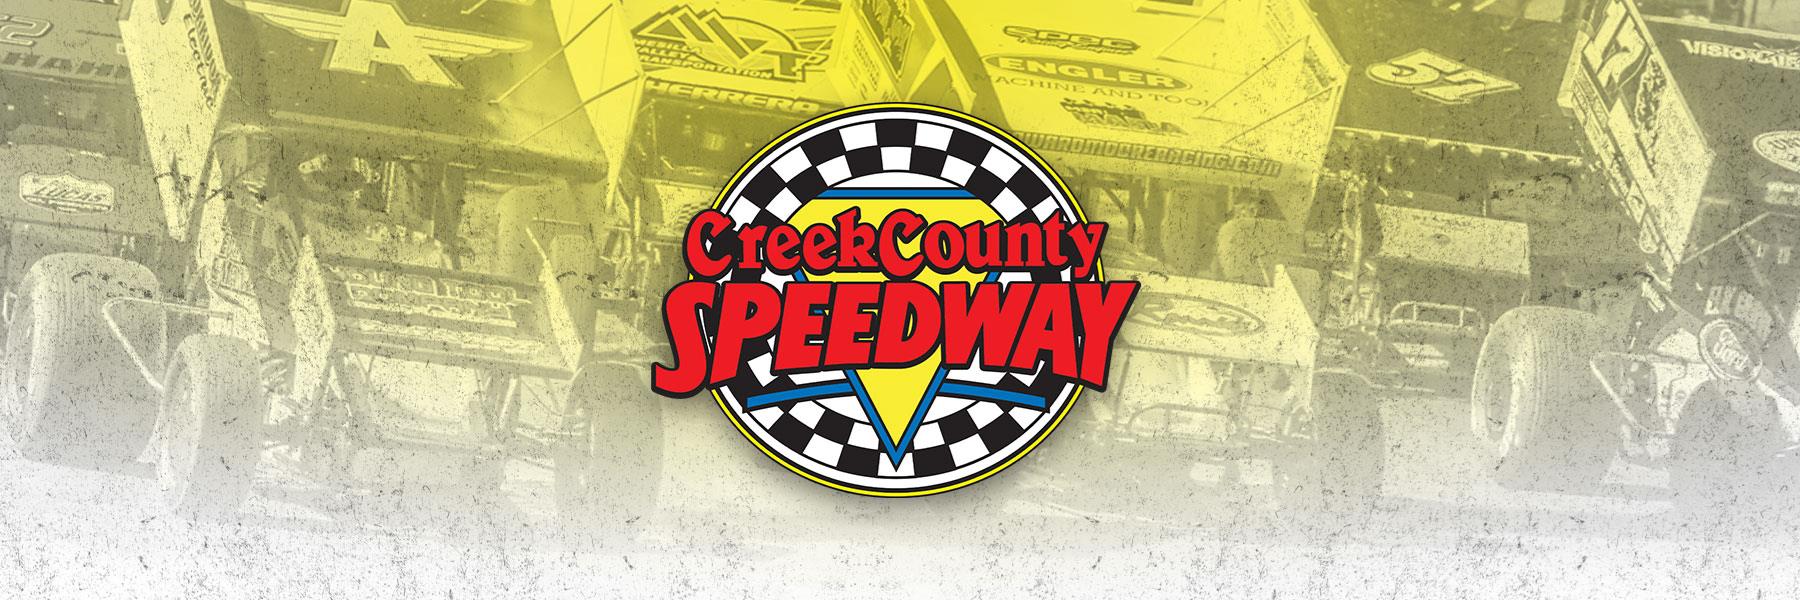 10/17/2020 - Creek County Speedway